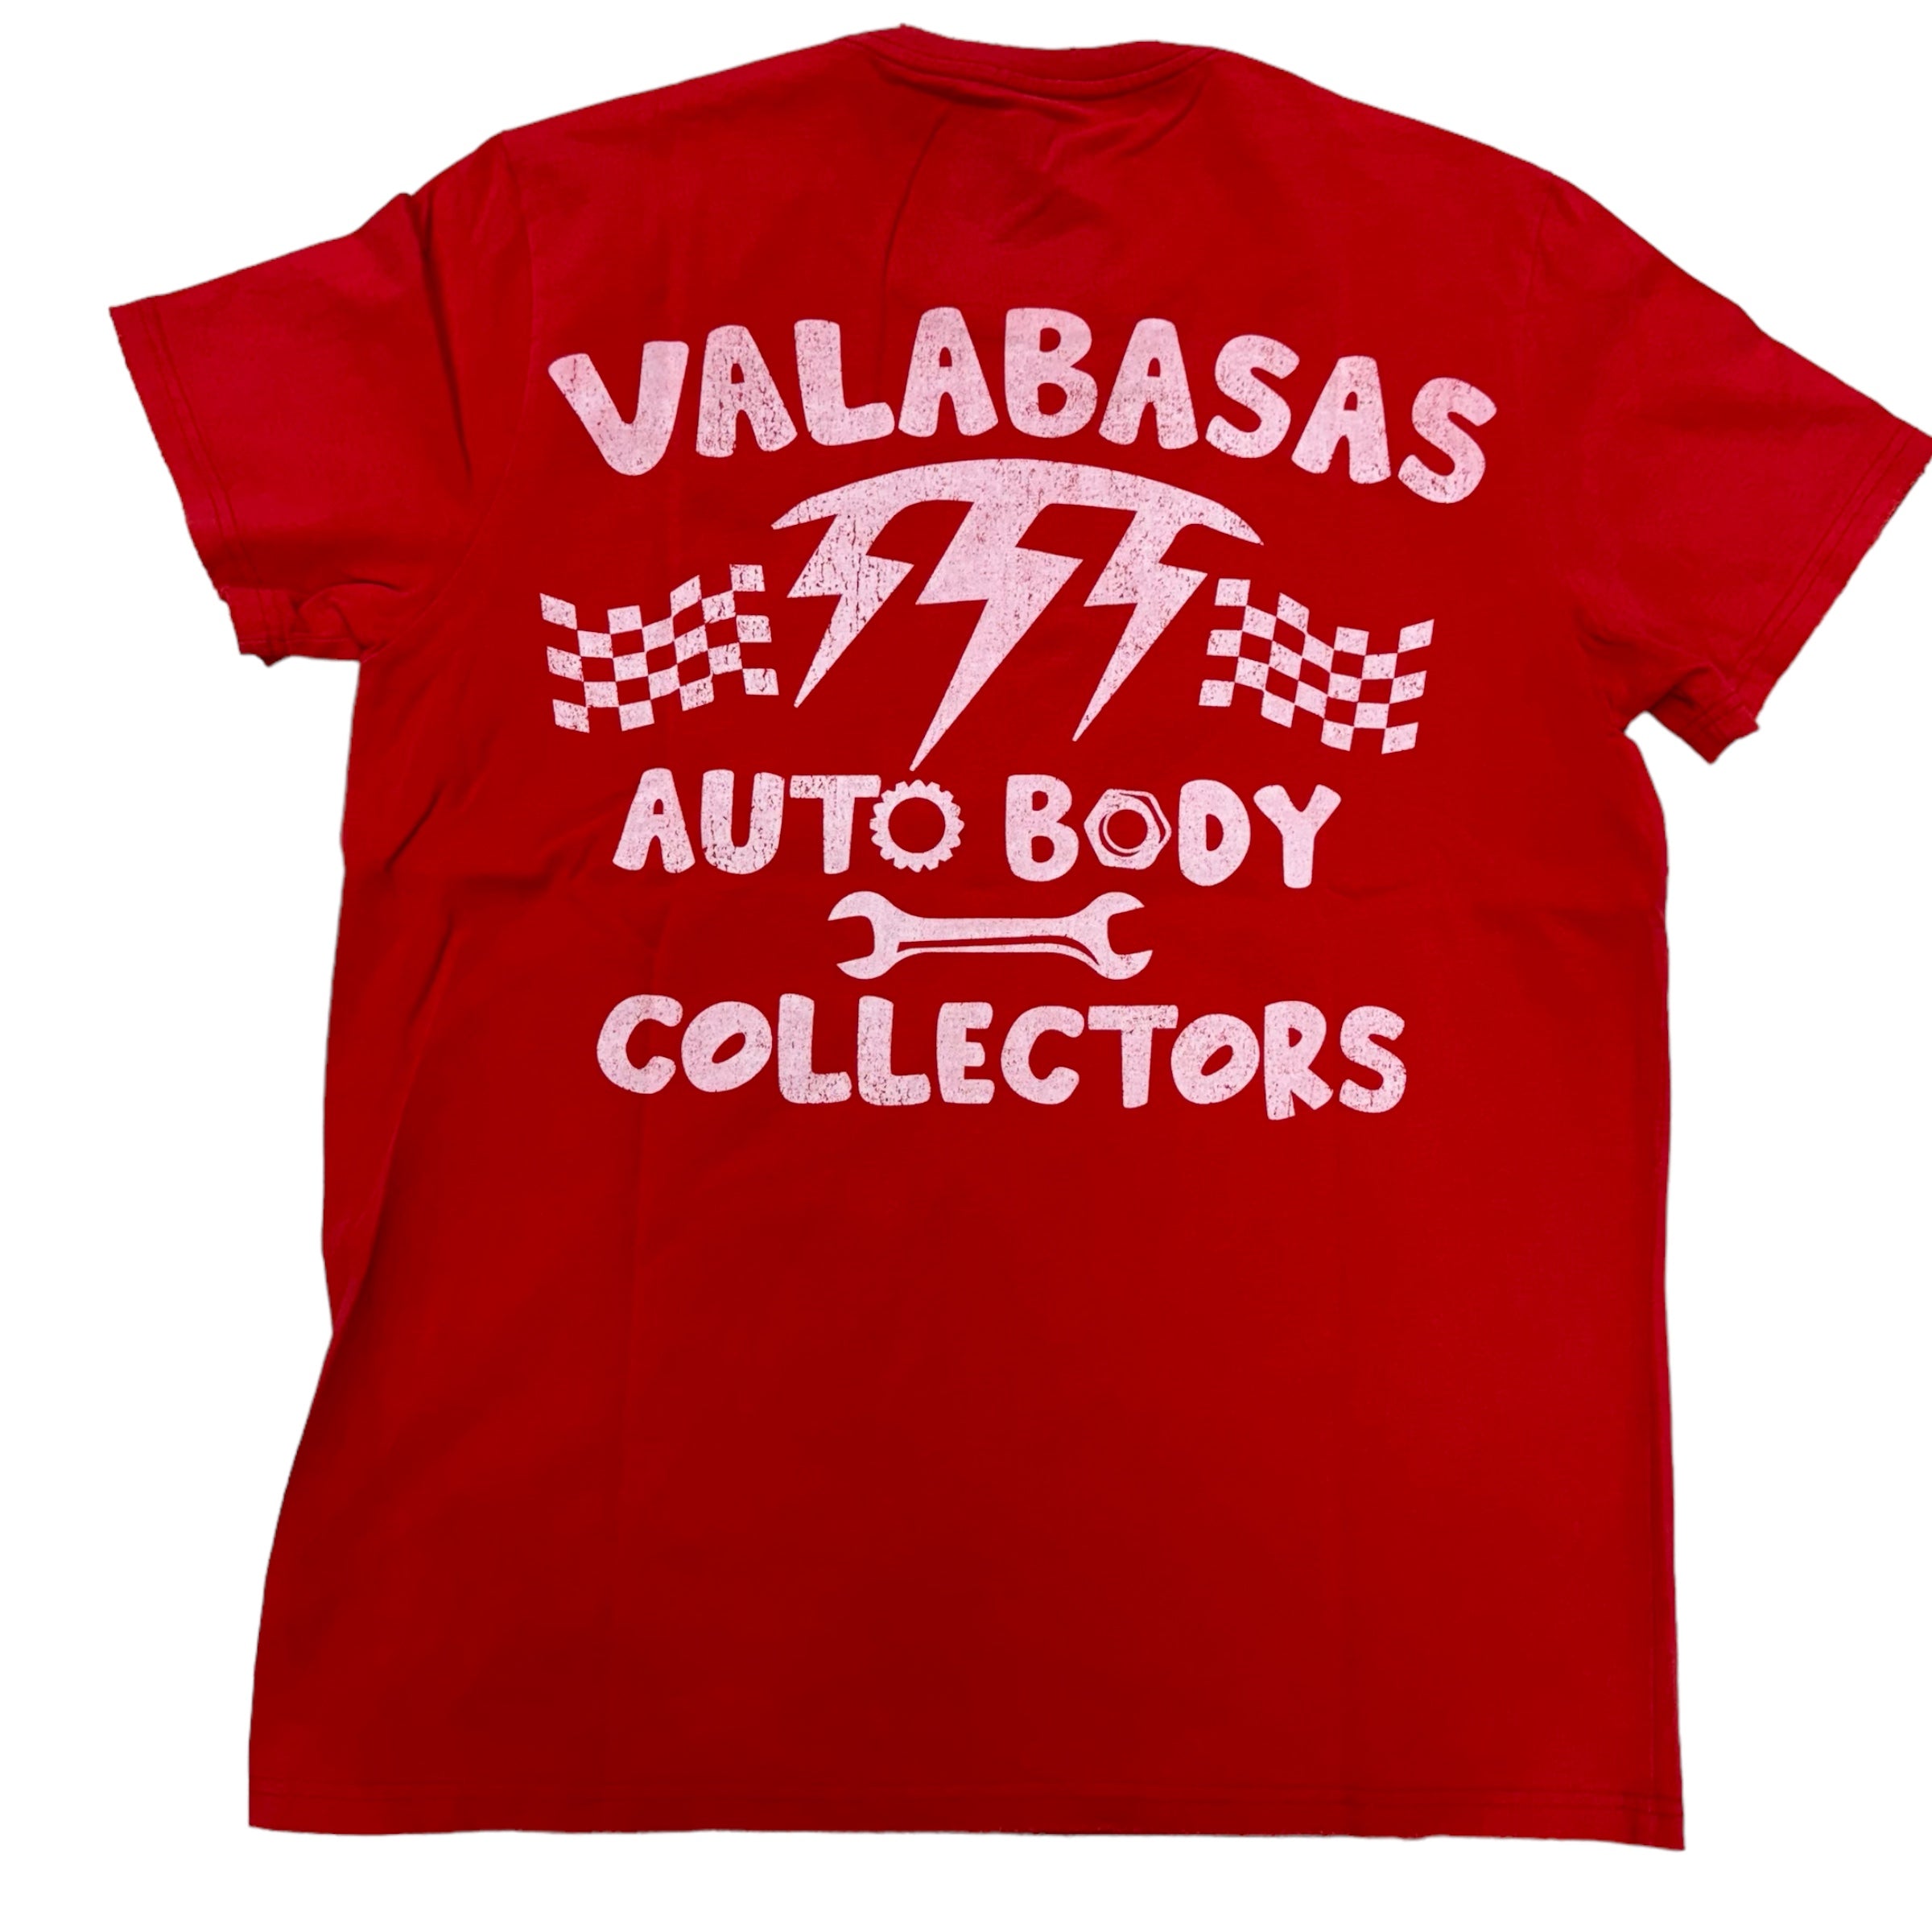 Valabasas “ On Guard  “ Vintage Red  9025